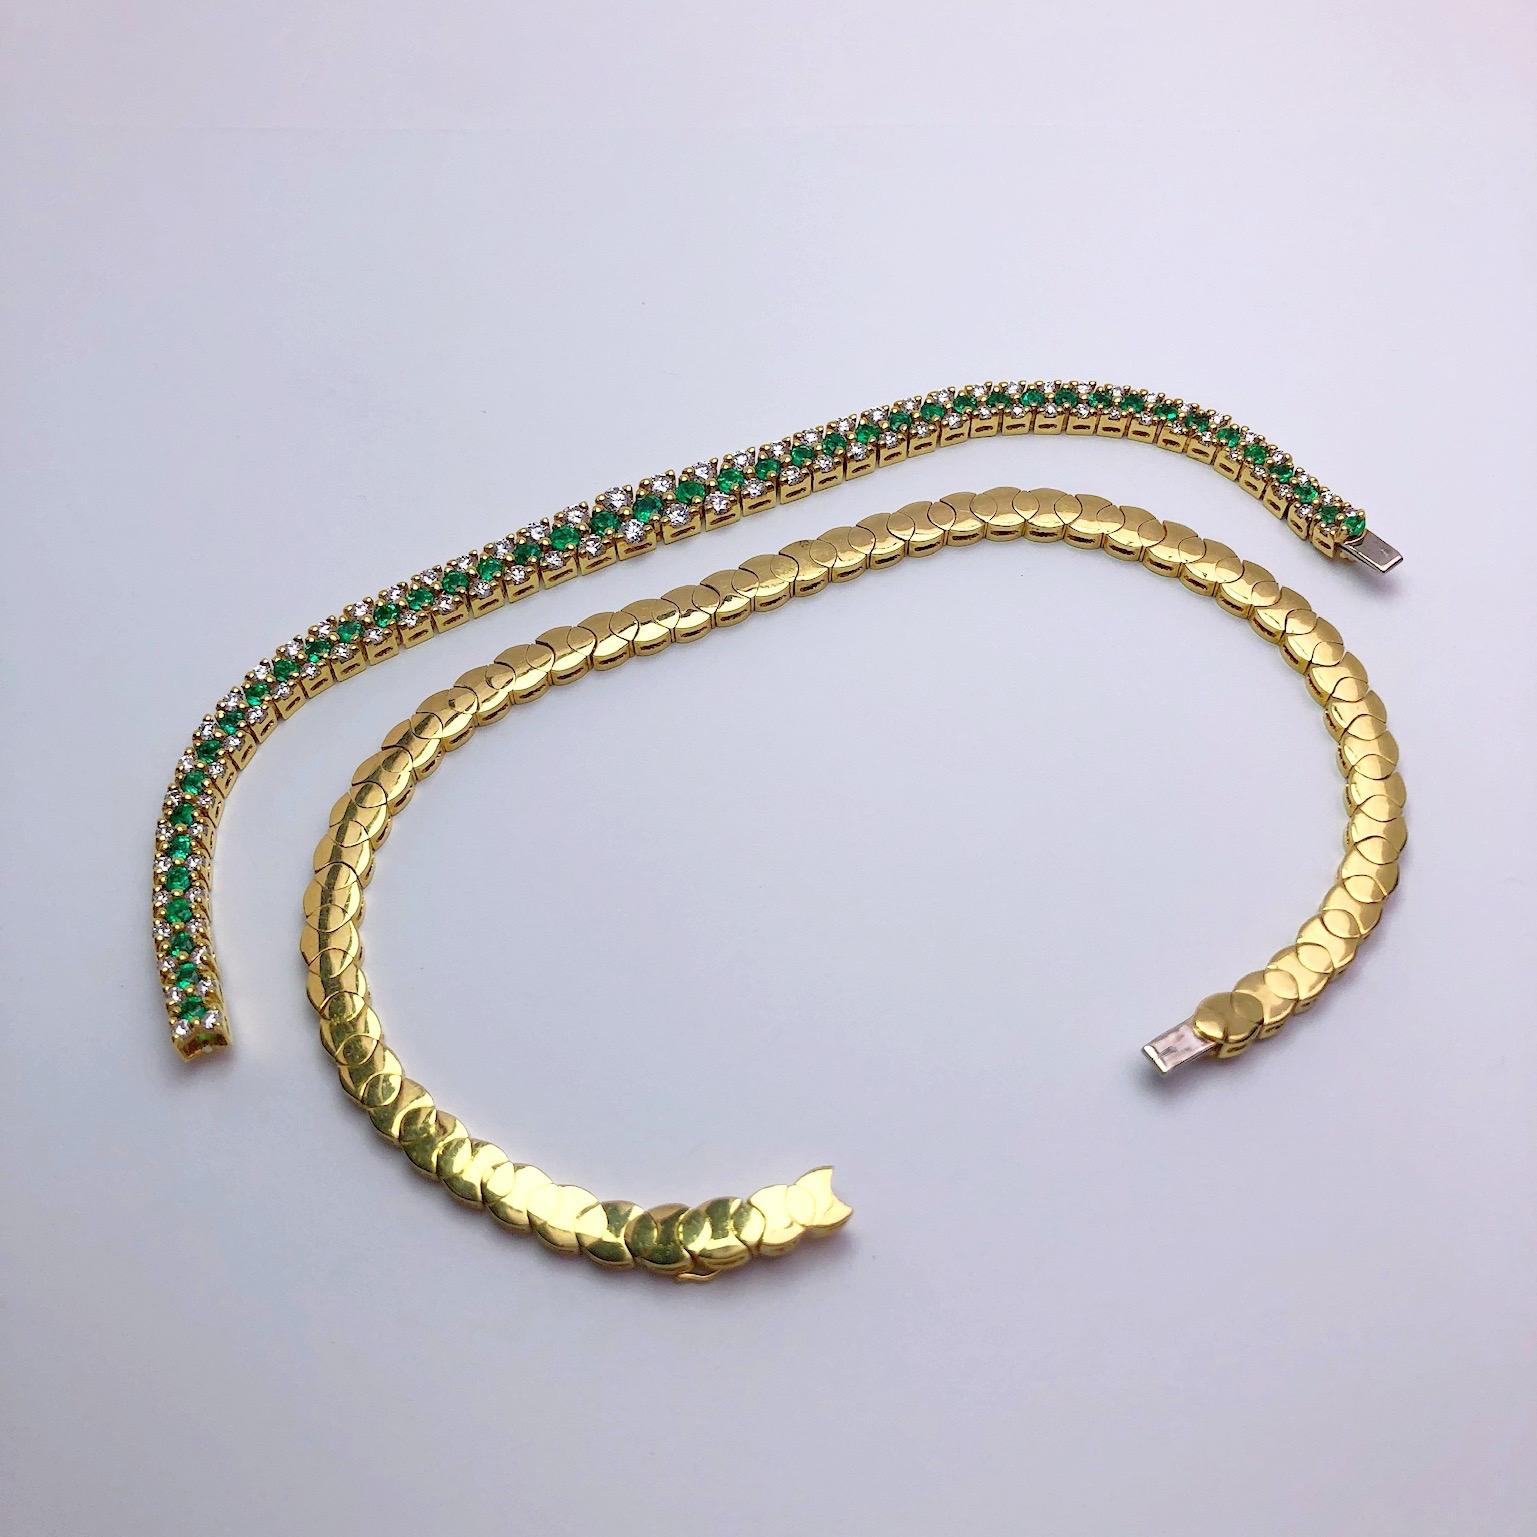 18 Karat Gold 3.68 Carat Emerald and 4.31 Carat Diamond Necklace and Bracelet For Sale 3